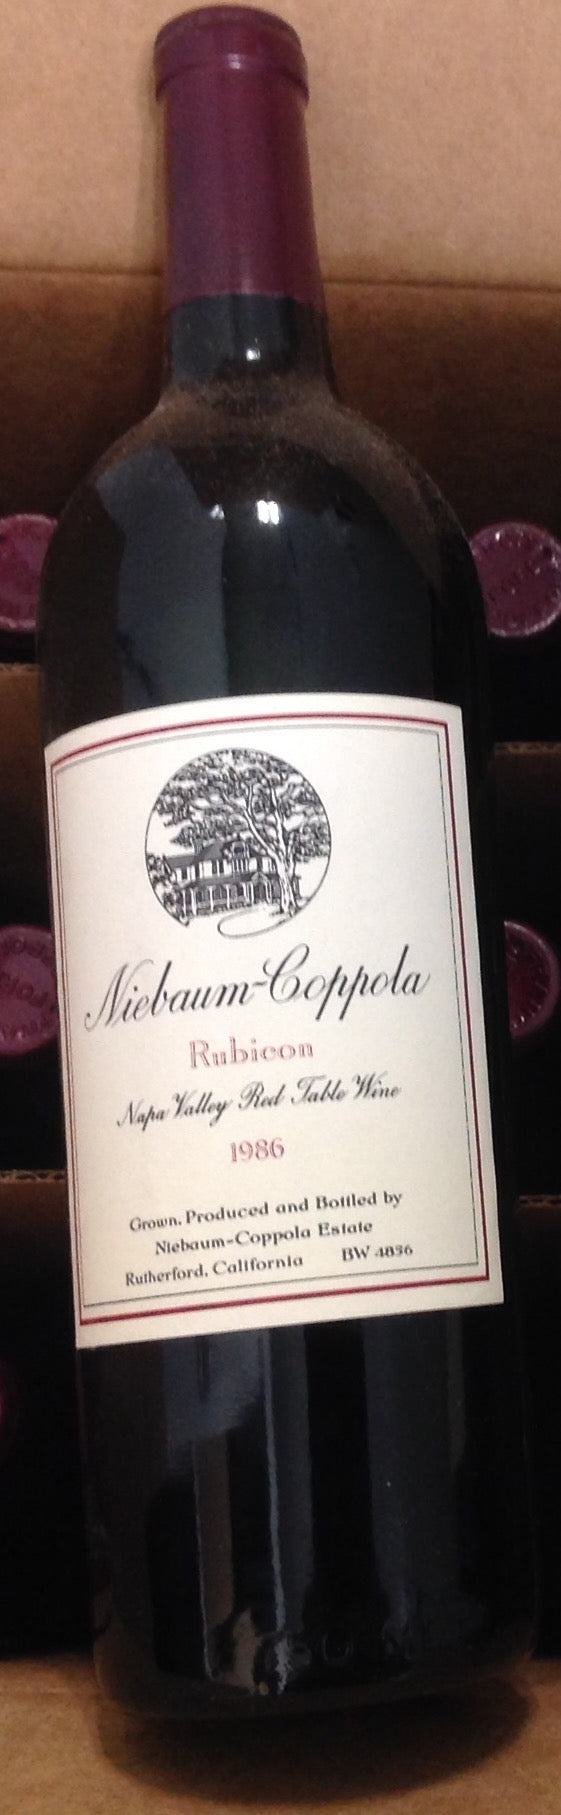 1986 Niebaum-Coppola Rubicon Rutherford, Napa red table wine